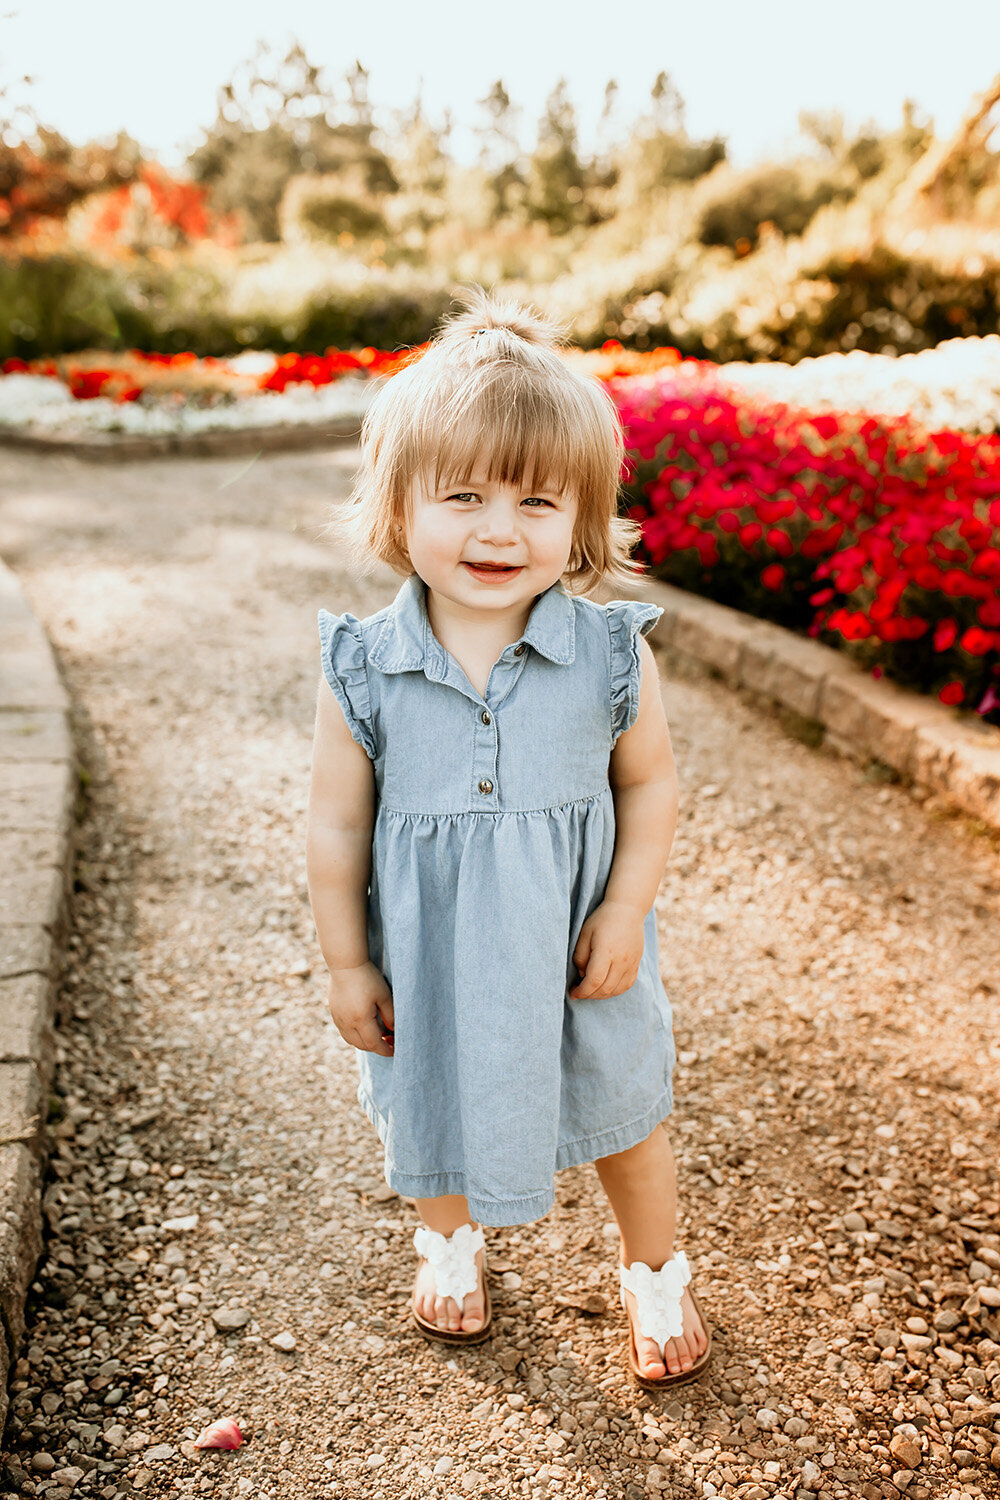 little girl in blue dress standing in garden